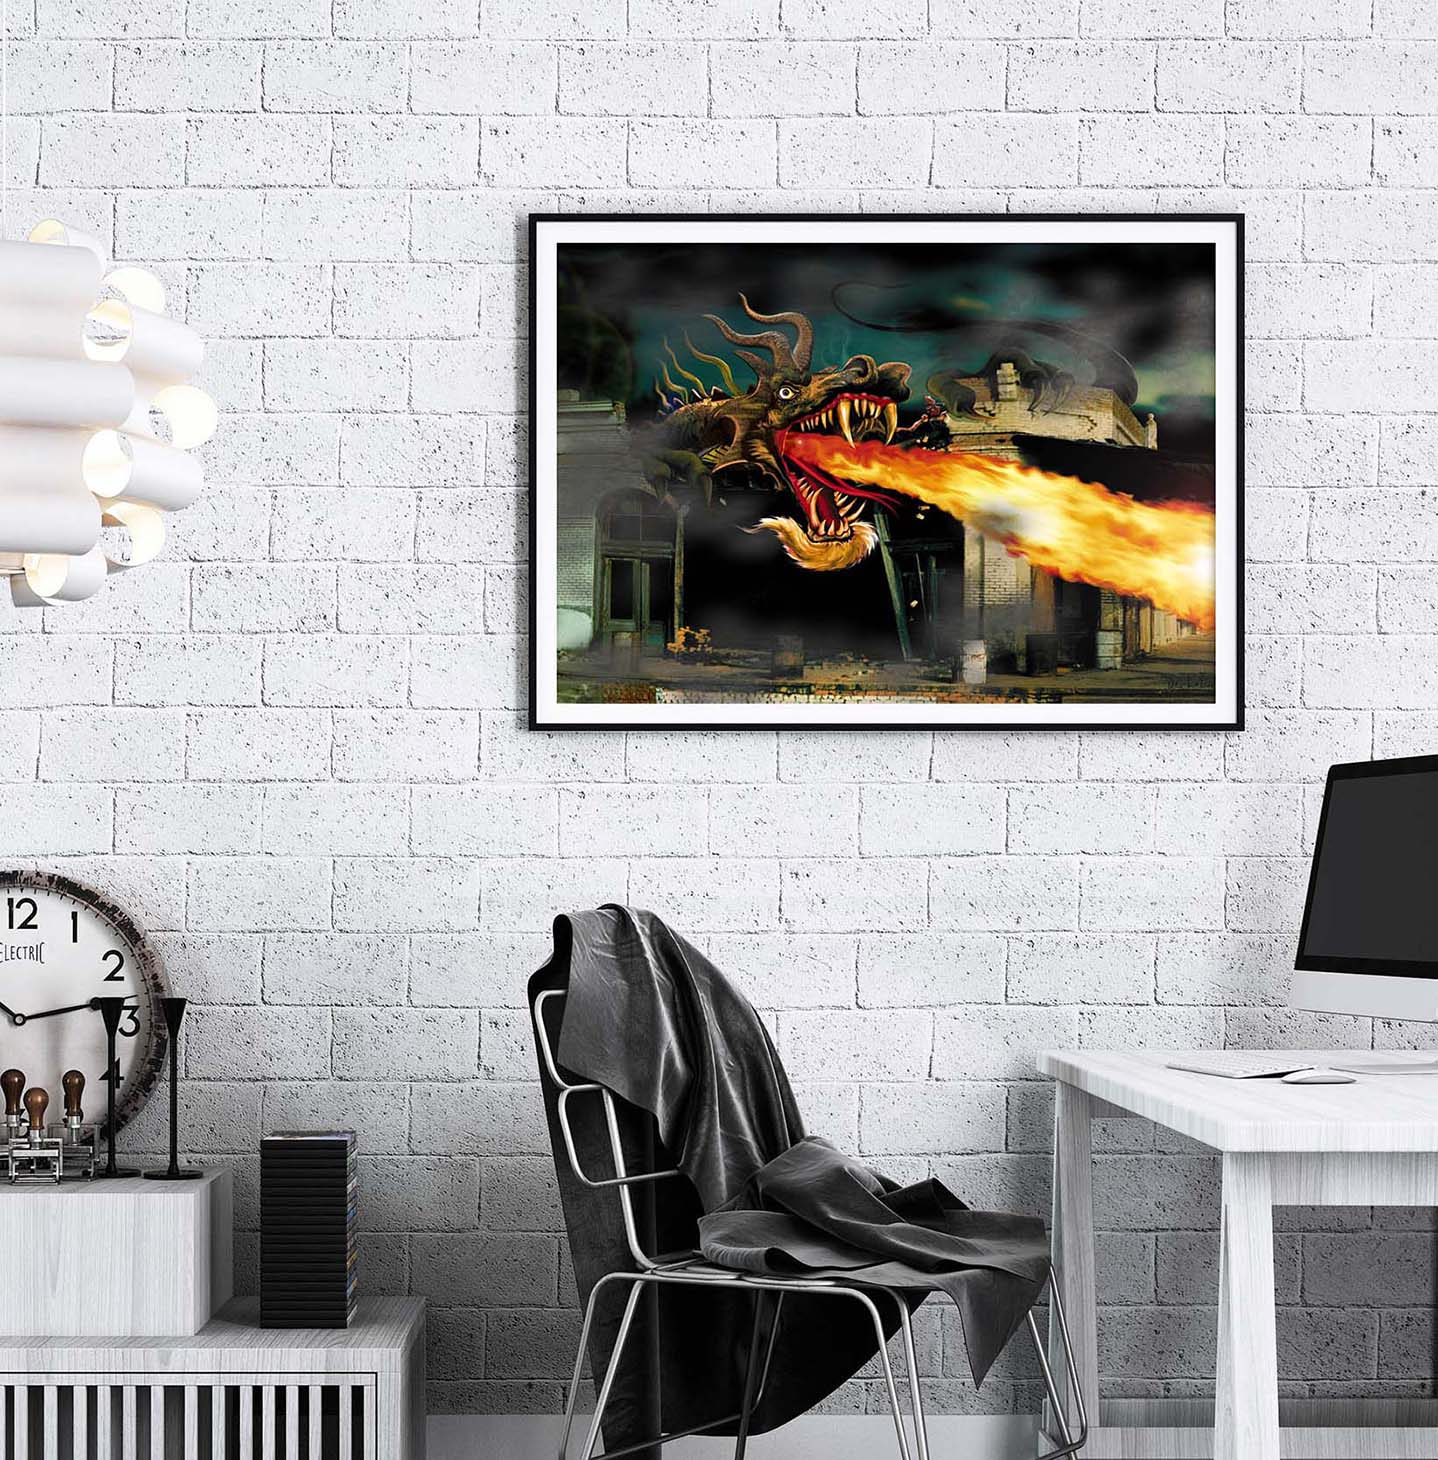 Barton the Mutant Salamander framed print on an office wall by Doug LaRue